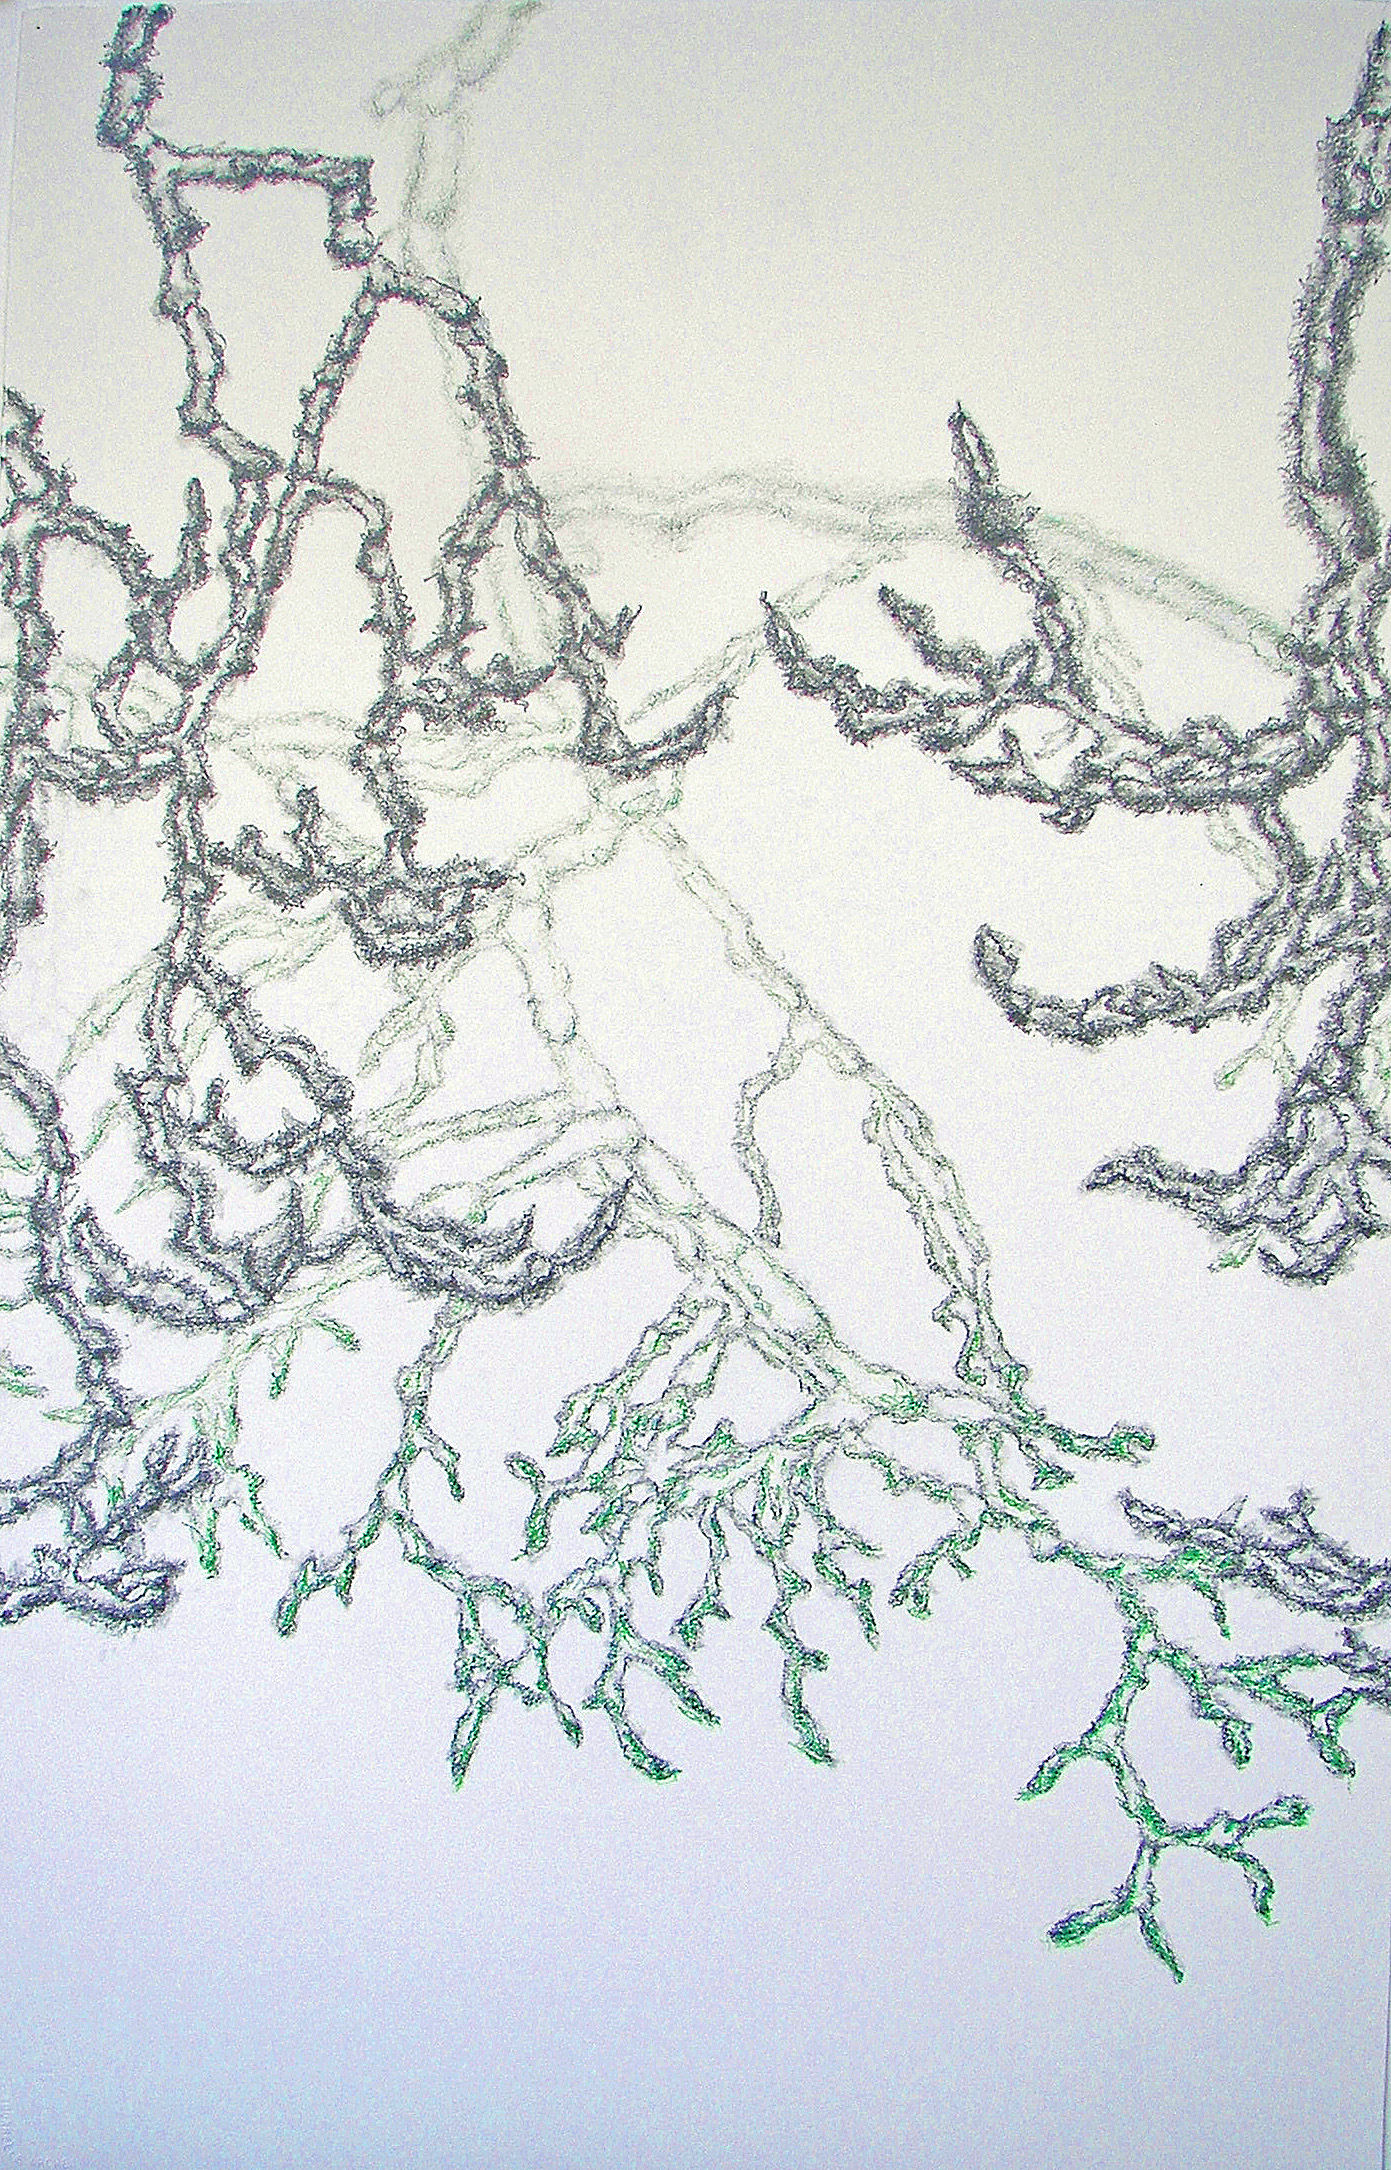 2011-zonder titel, grafiet, kleurpotlood op papier, 108x71cm